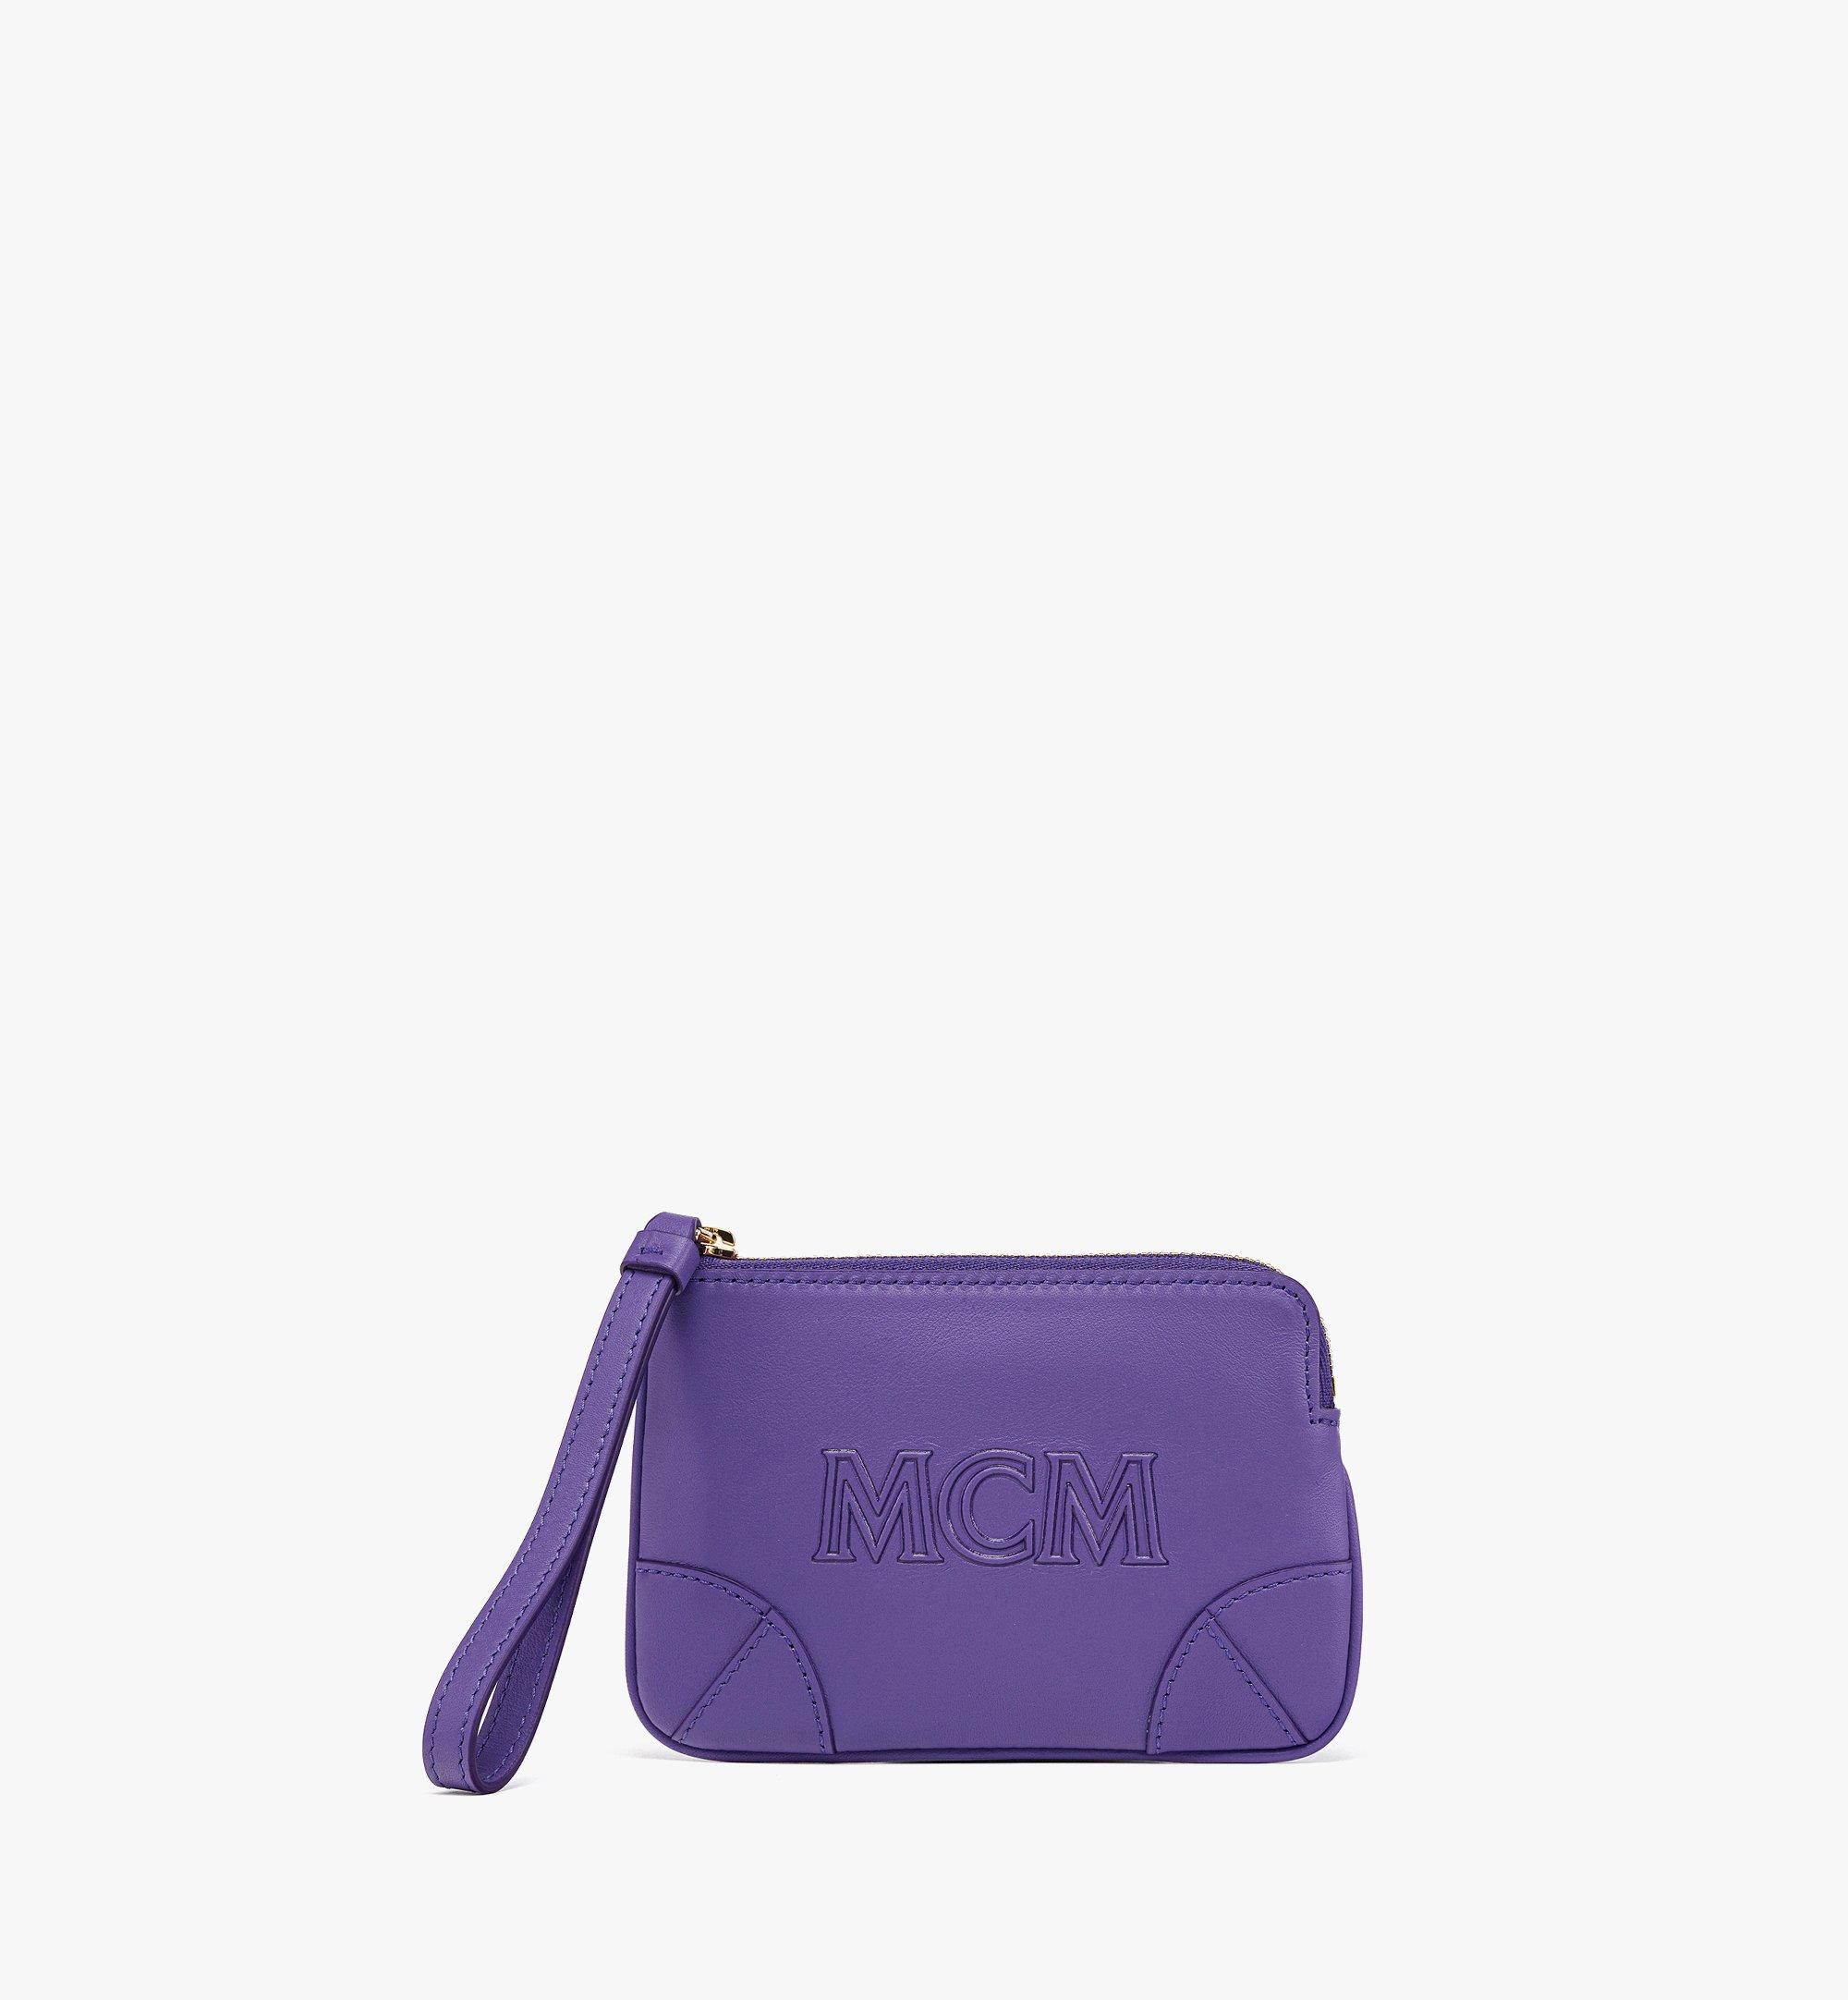 MCM Aren Wristlet Zip Pouch in Spanish Calf Leather Purple MYZDATA03UQ001 Alternate View 1